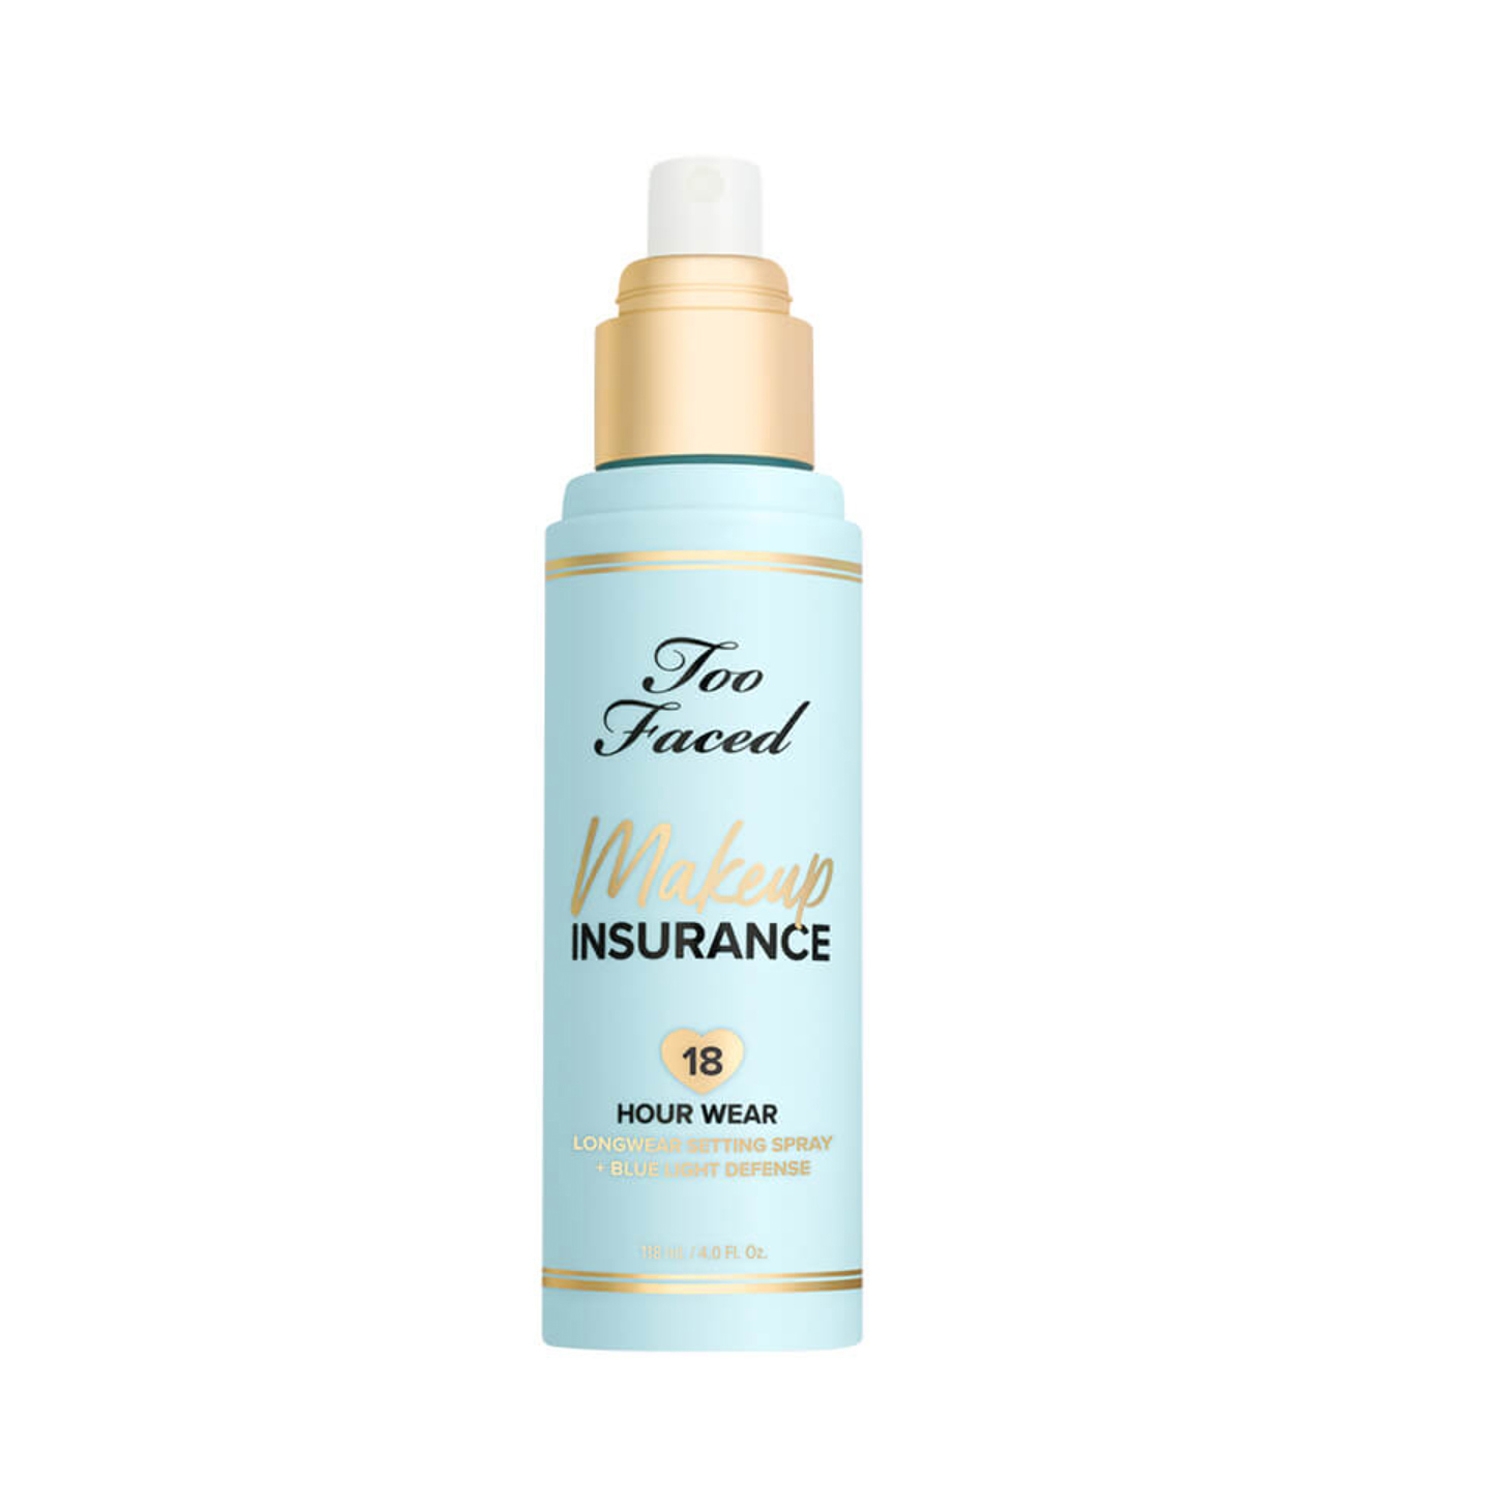 Too Faced Makeup Insurance Longwear Setting Spray (118ml)